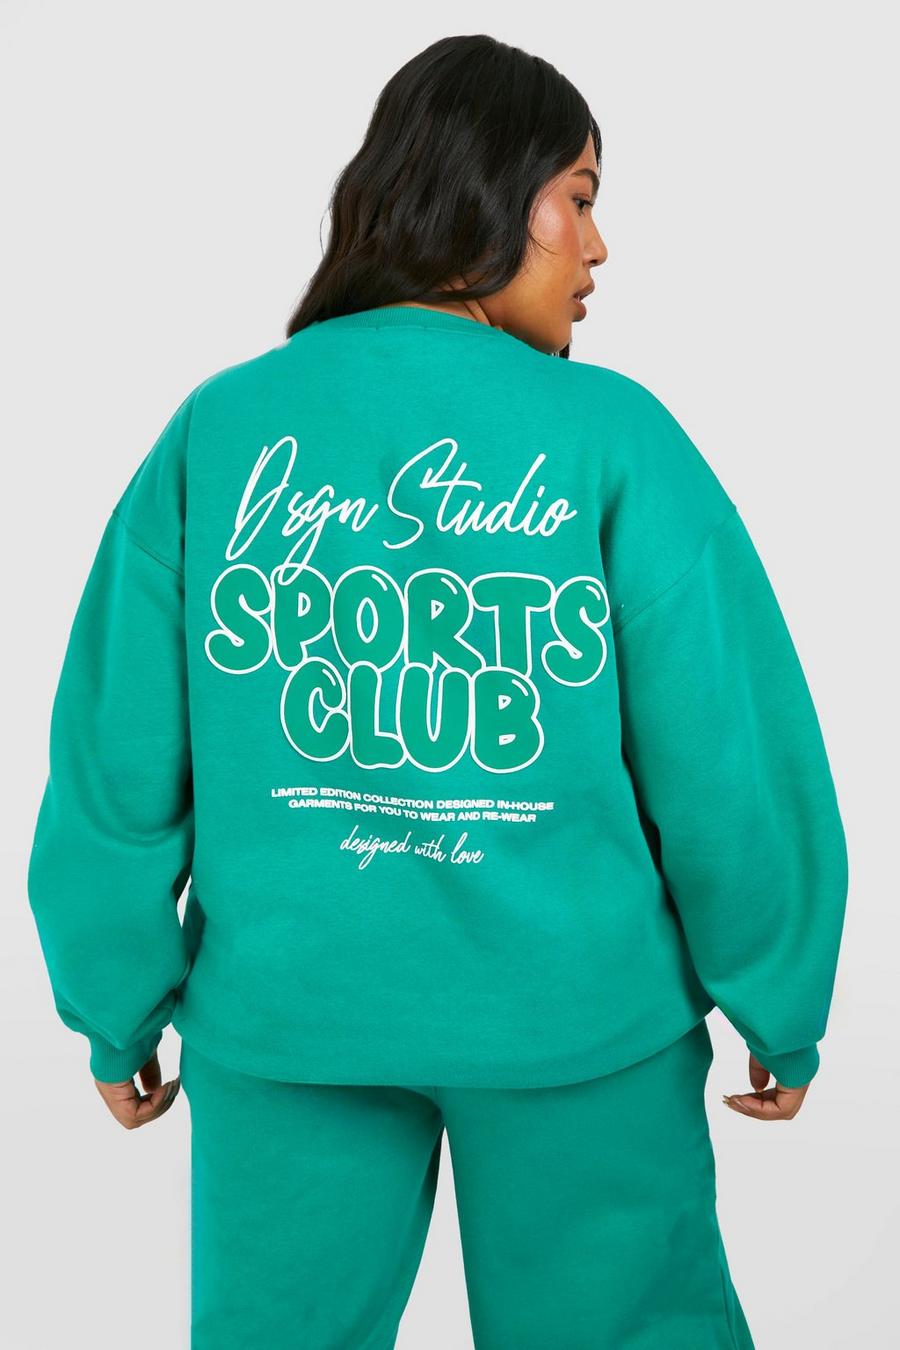 Plus Oversize Sweatshirt mit Dsgn Studio Sports Club Slogan, Green